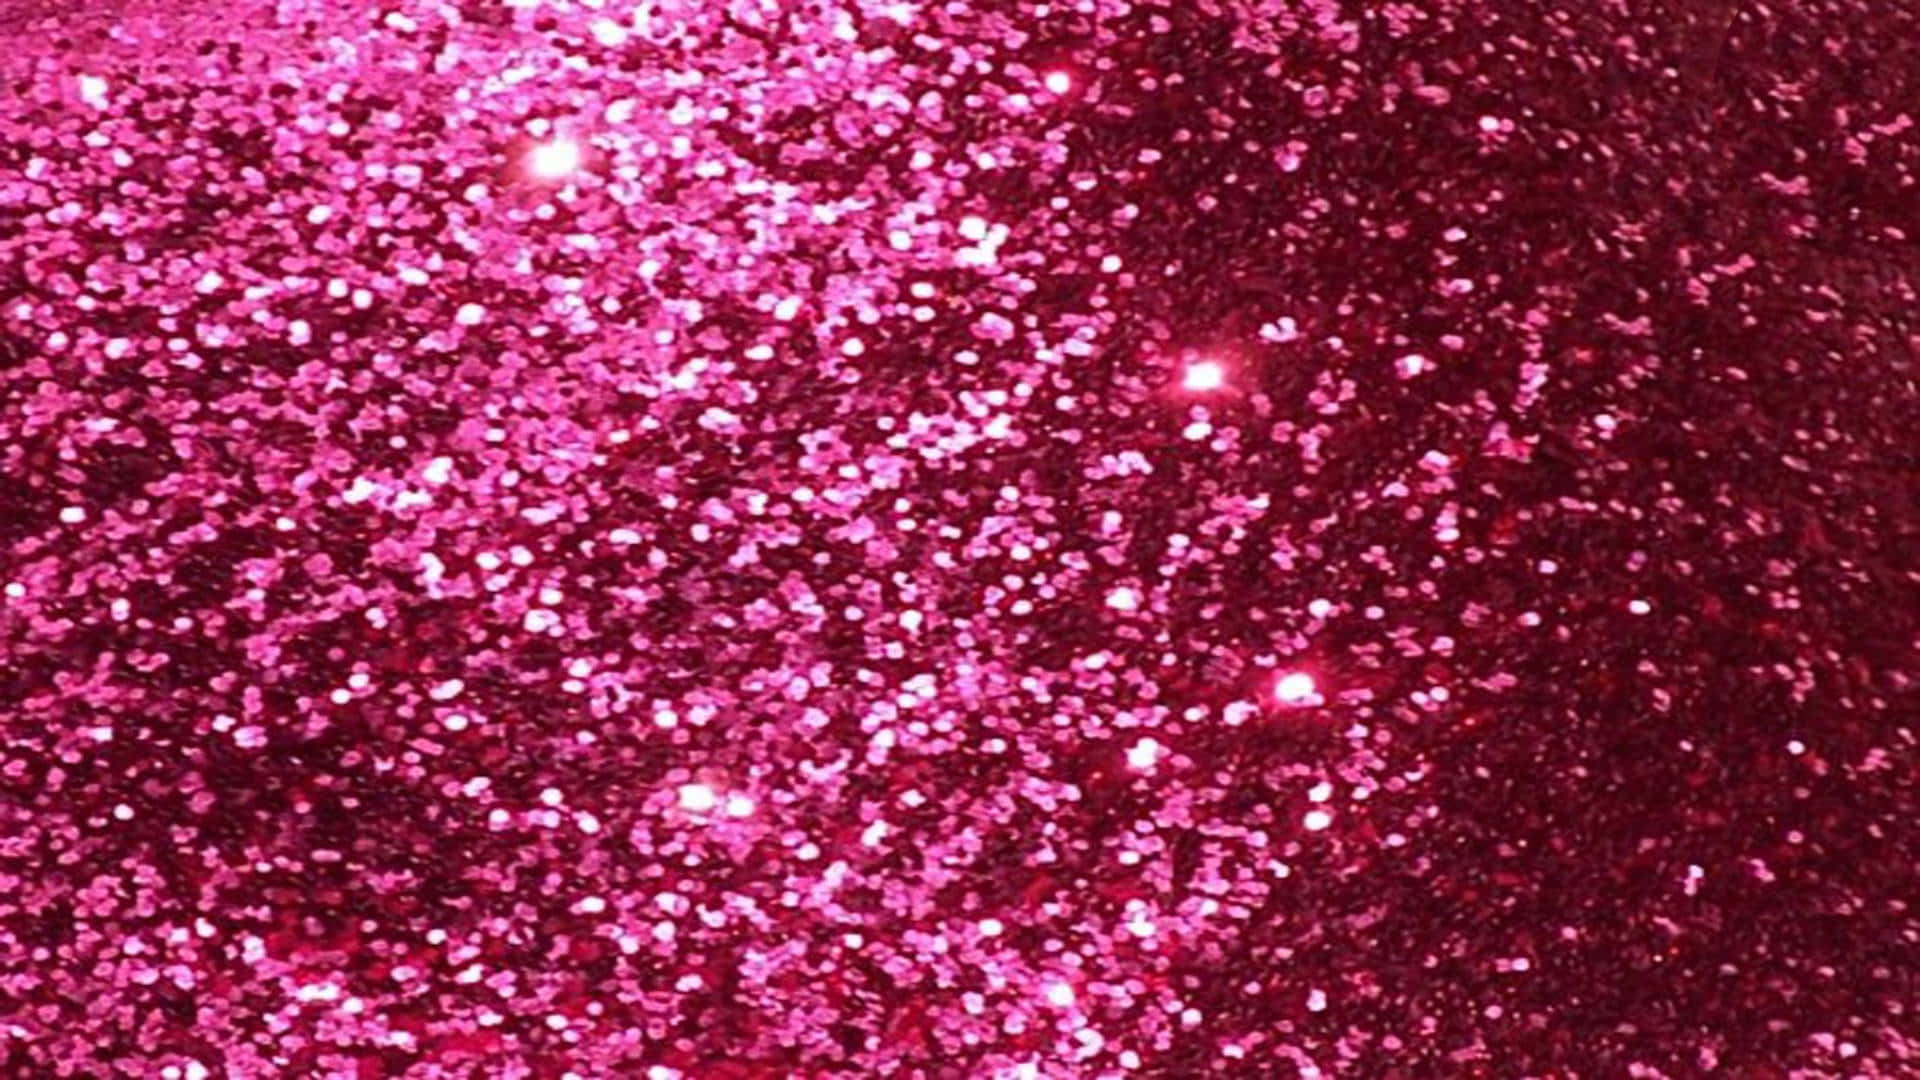 Pink Glitter Texture Baddie Aesthetic.jpg Wallpaper